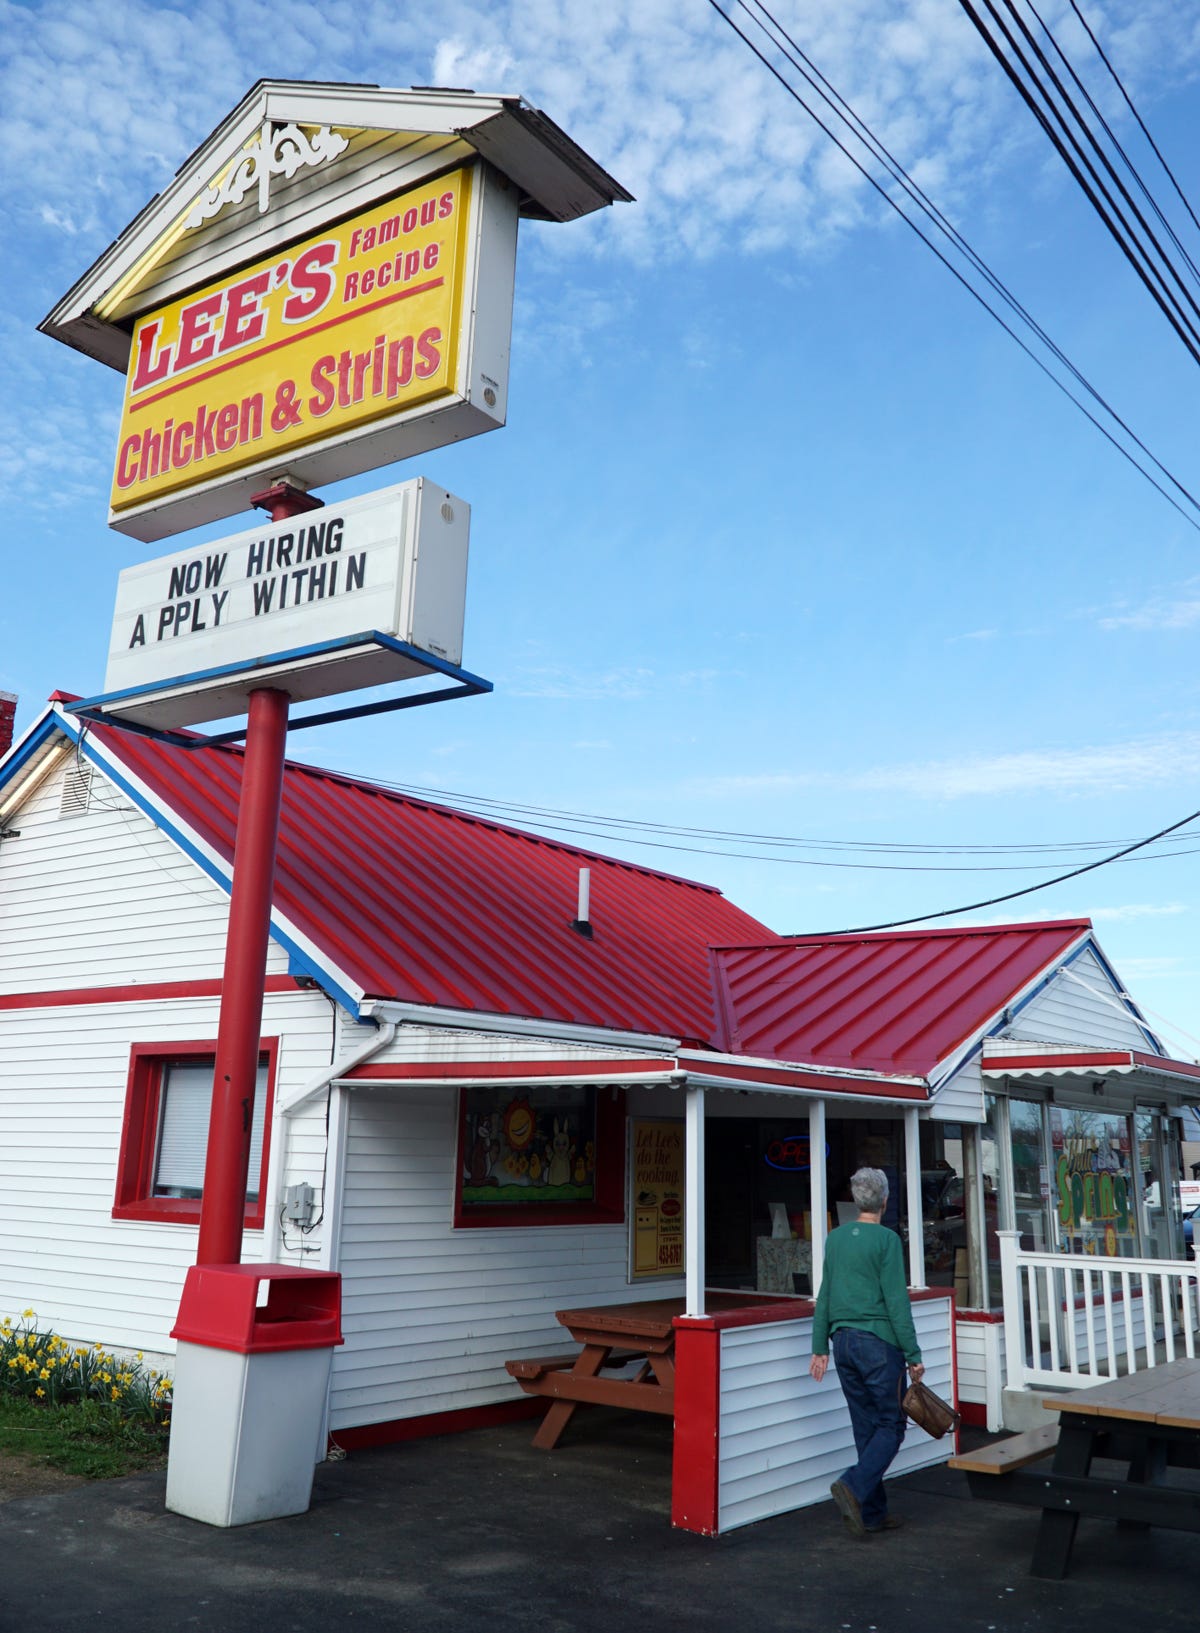 Lee's Chicken a popular landmark in Plymouth